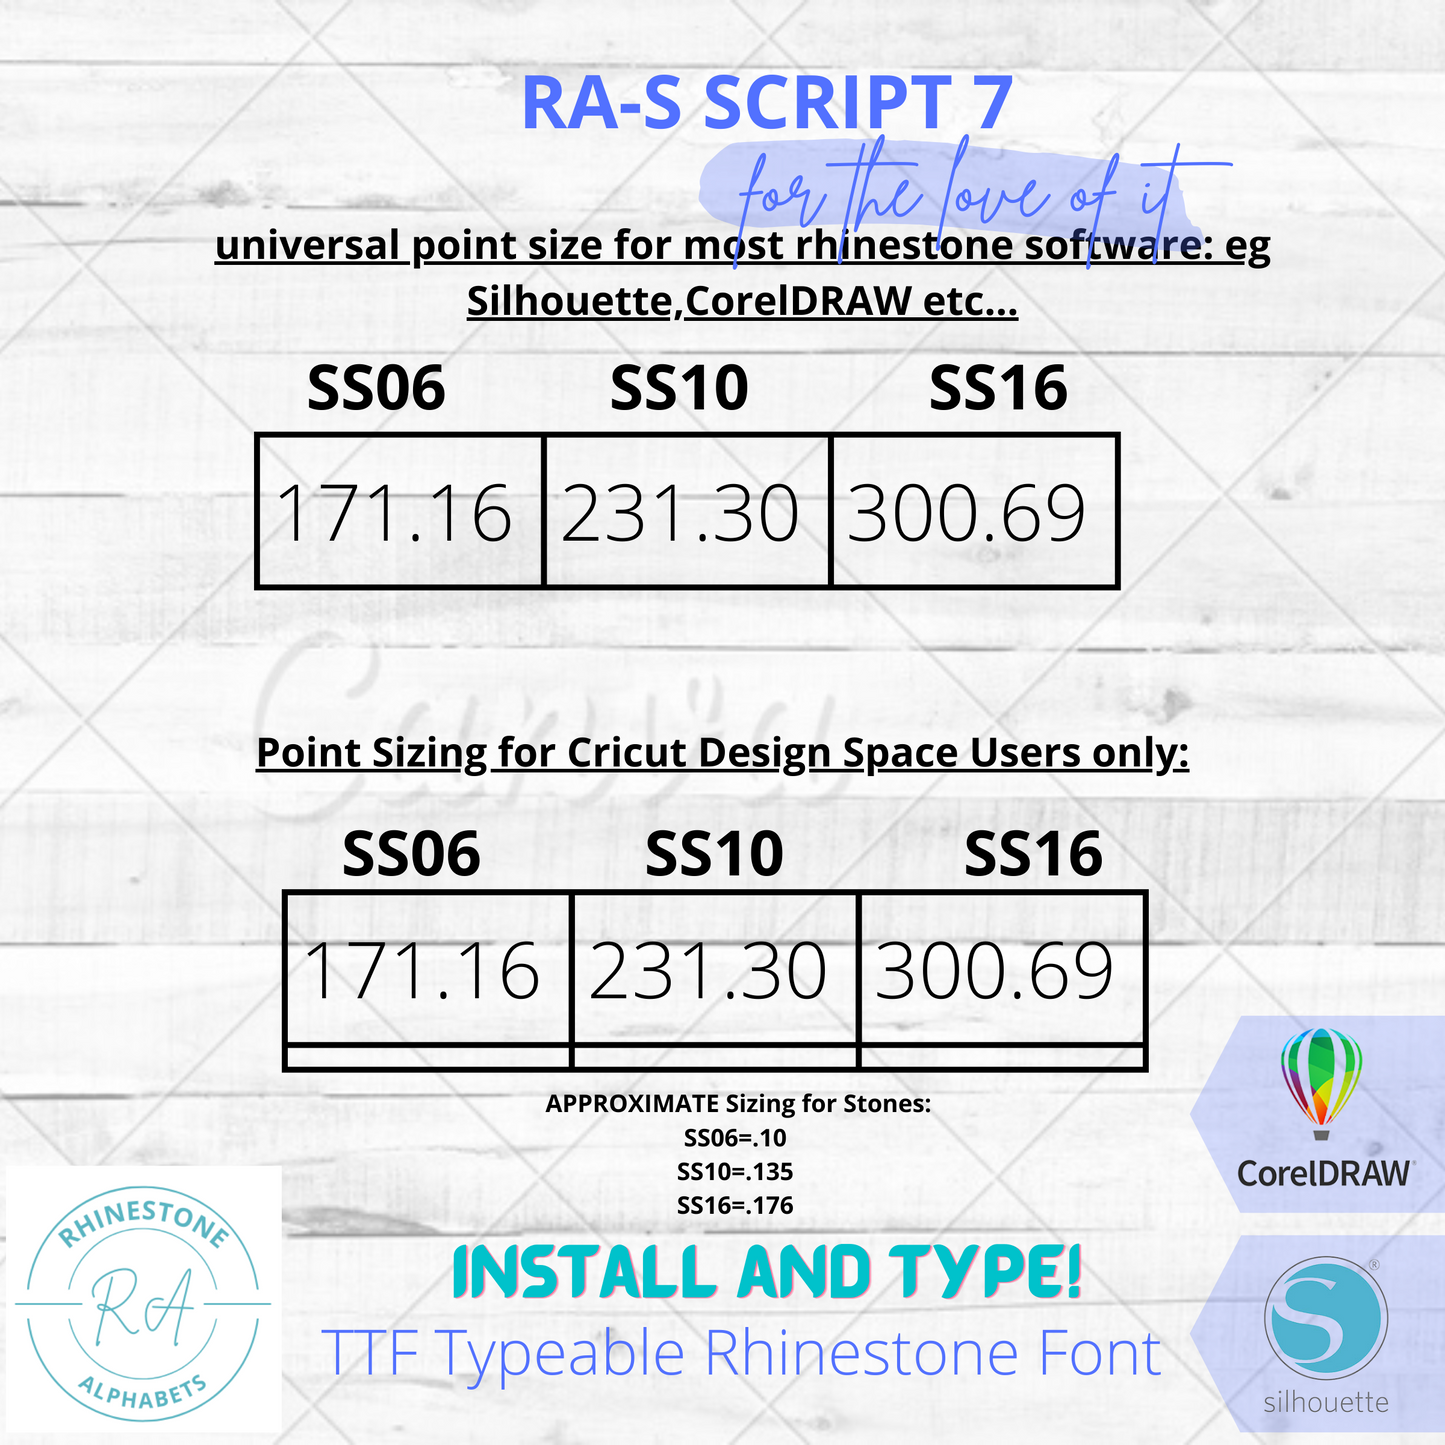 RA-S Script 7